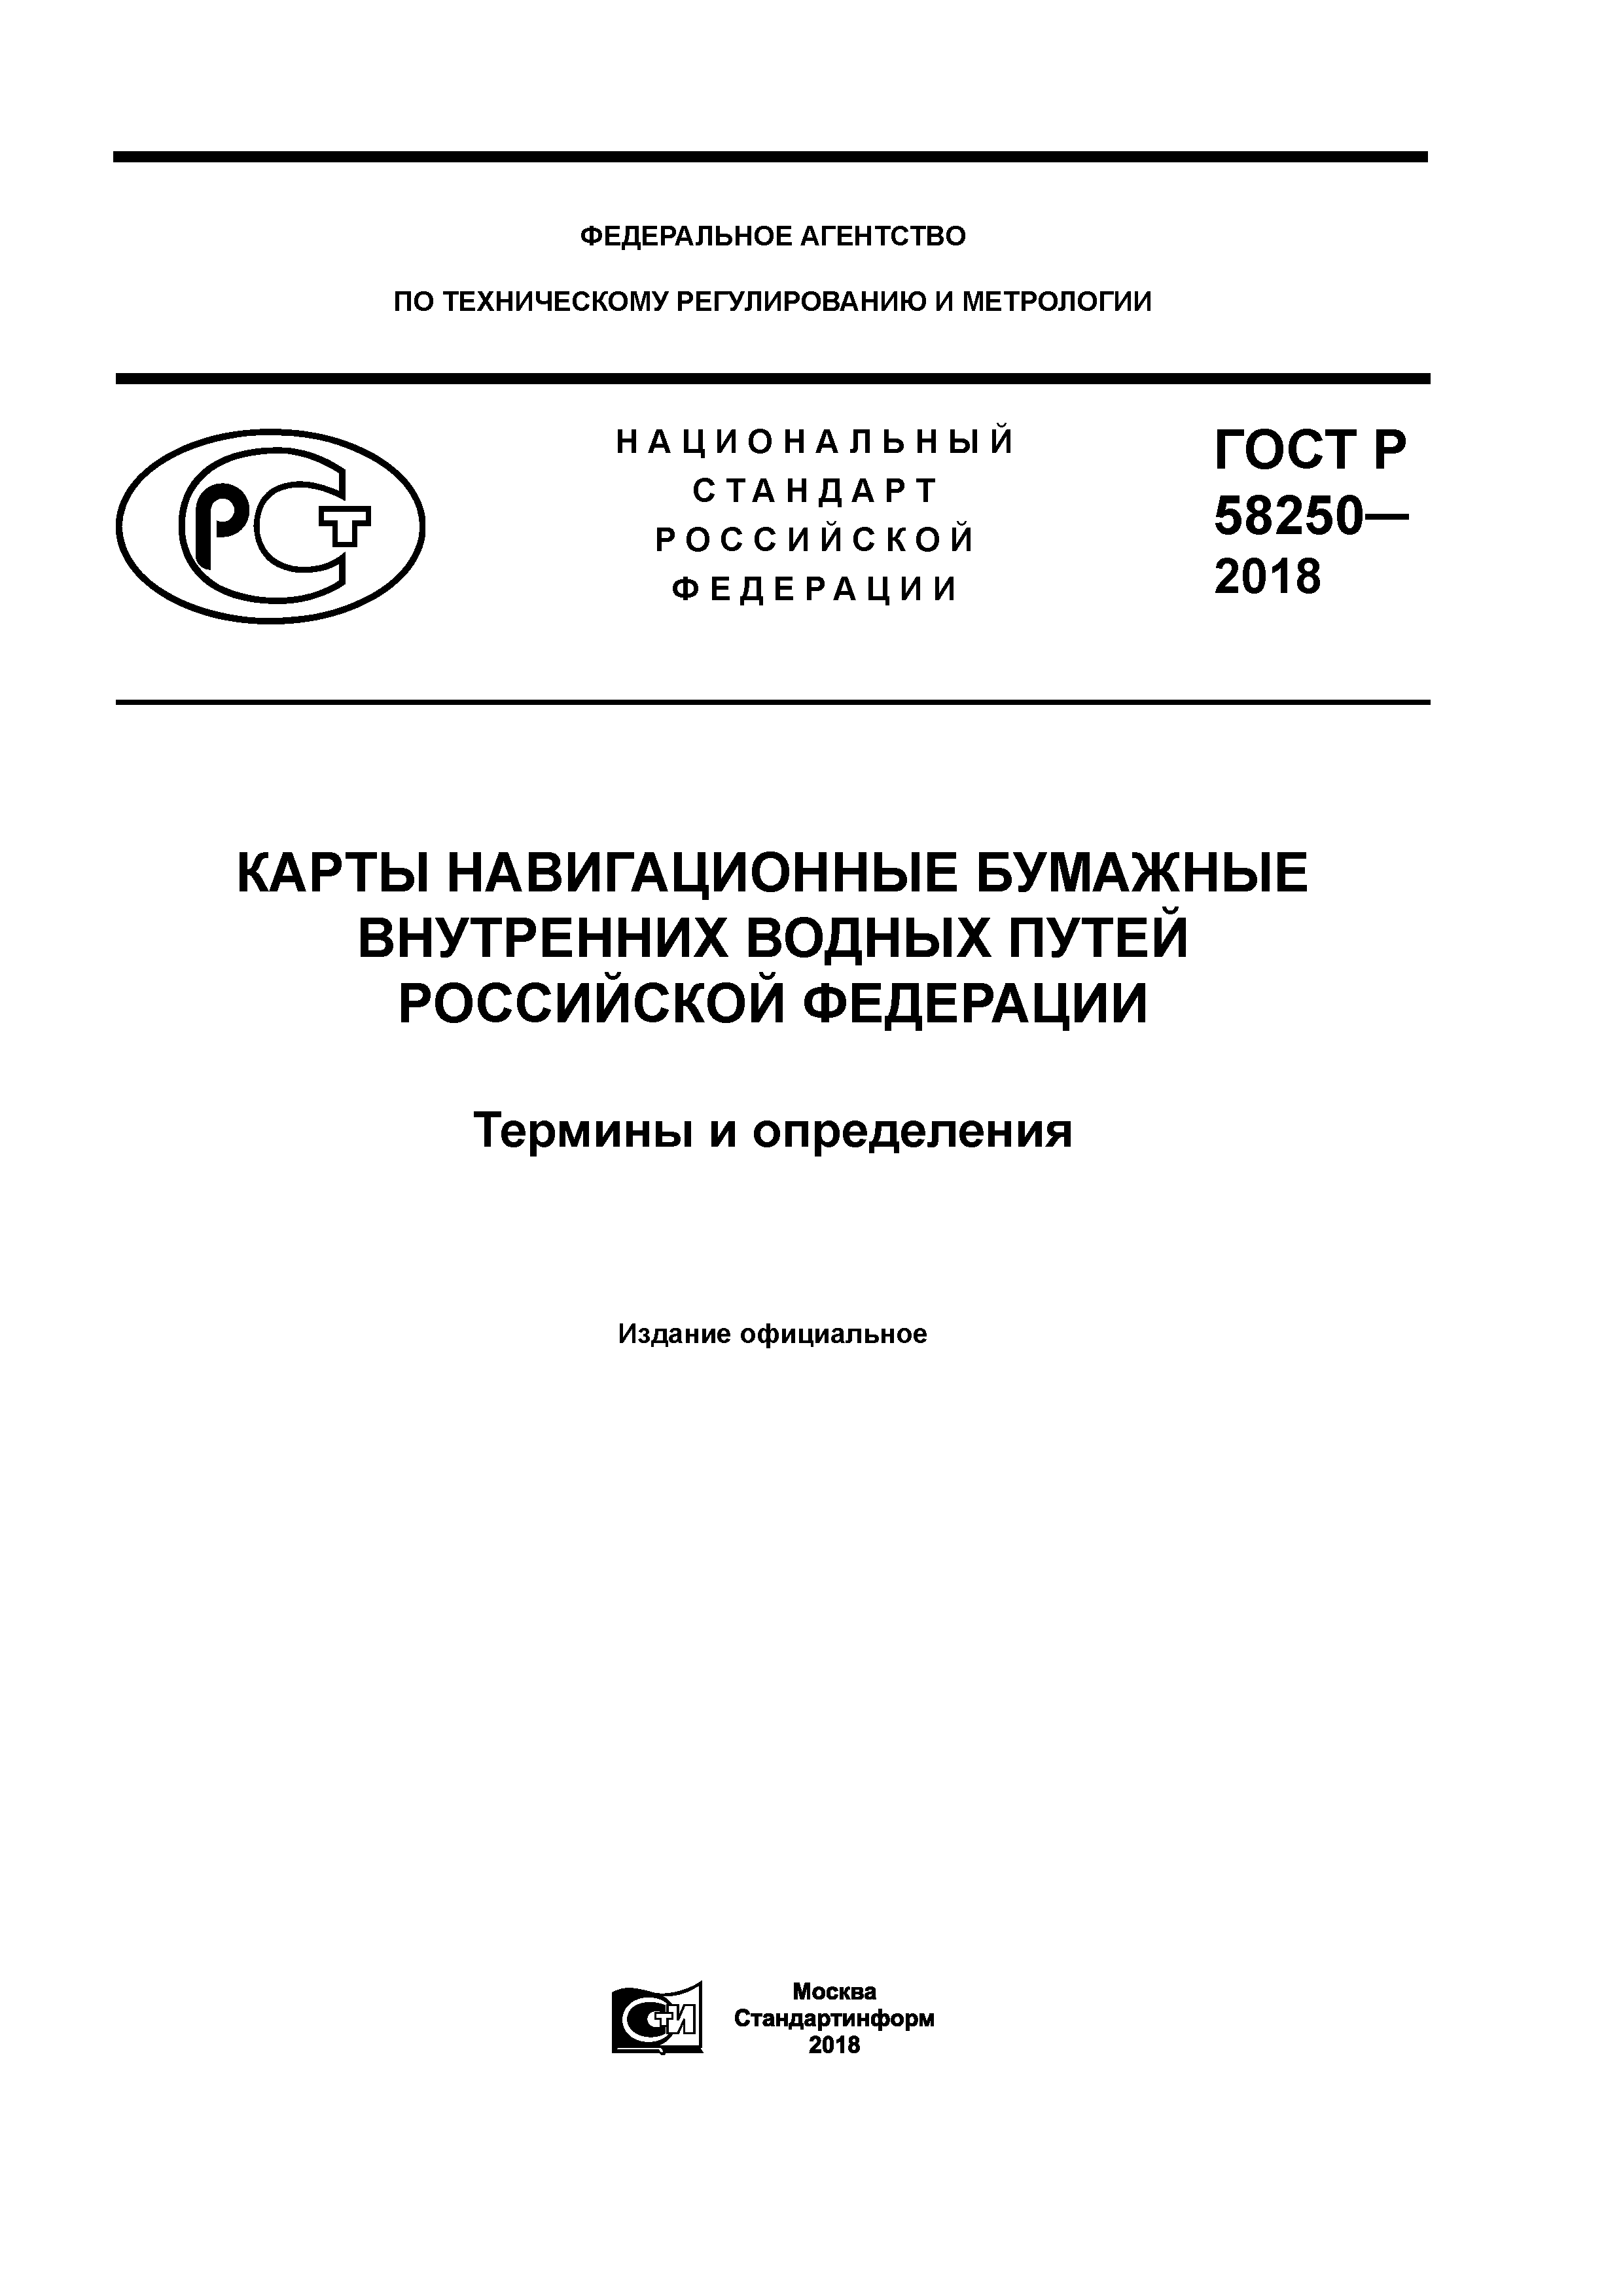 ГОСТ Р 58250-2018